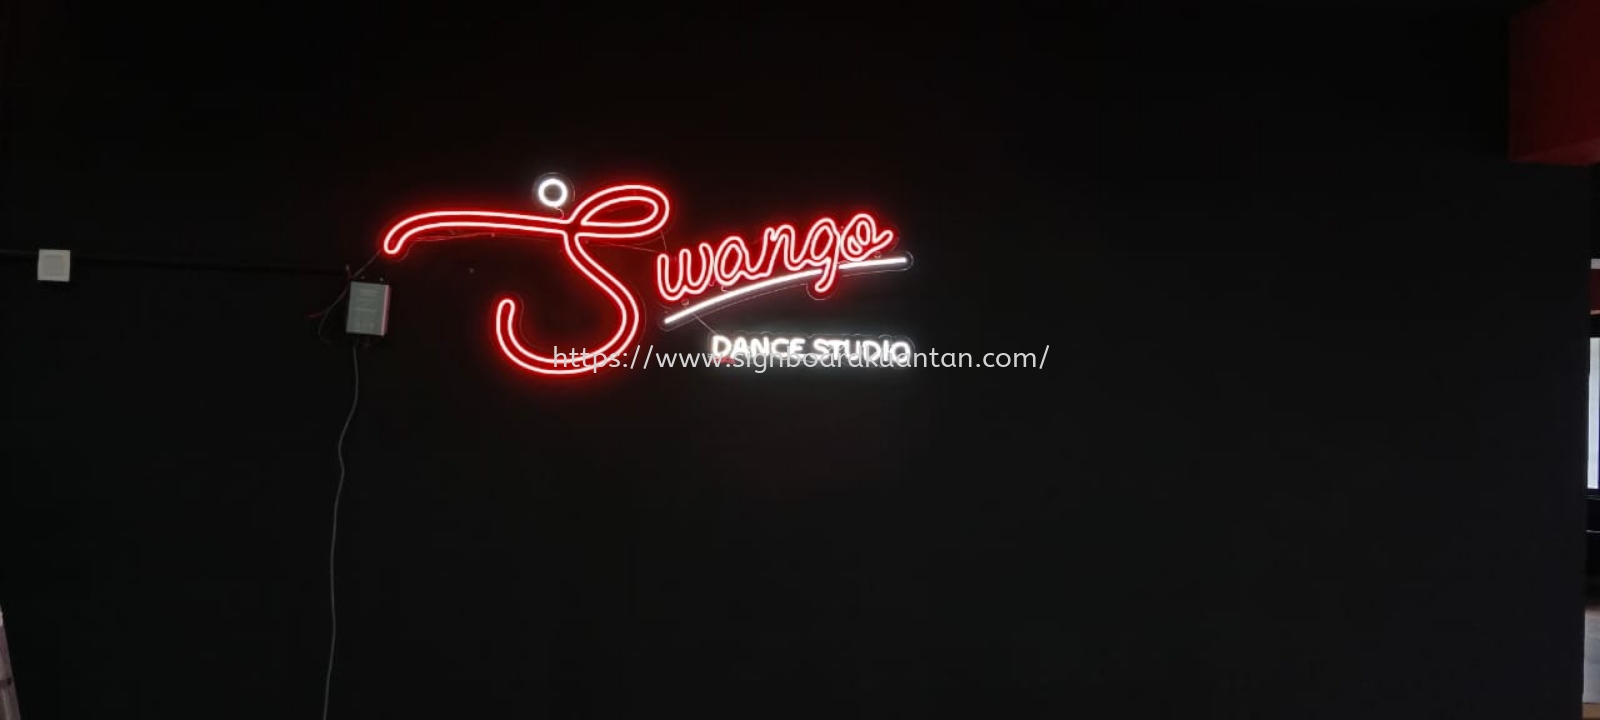 SWANGA DANCE STUDIO INDOOR LED NEON SIGNAGE AT